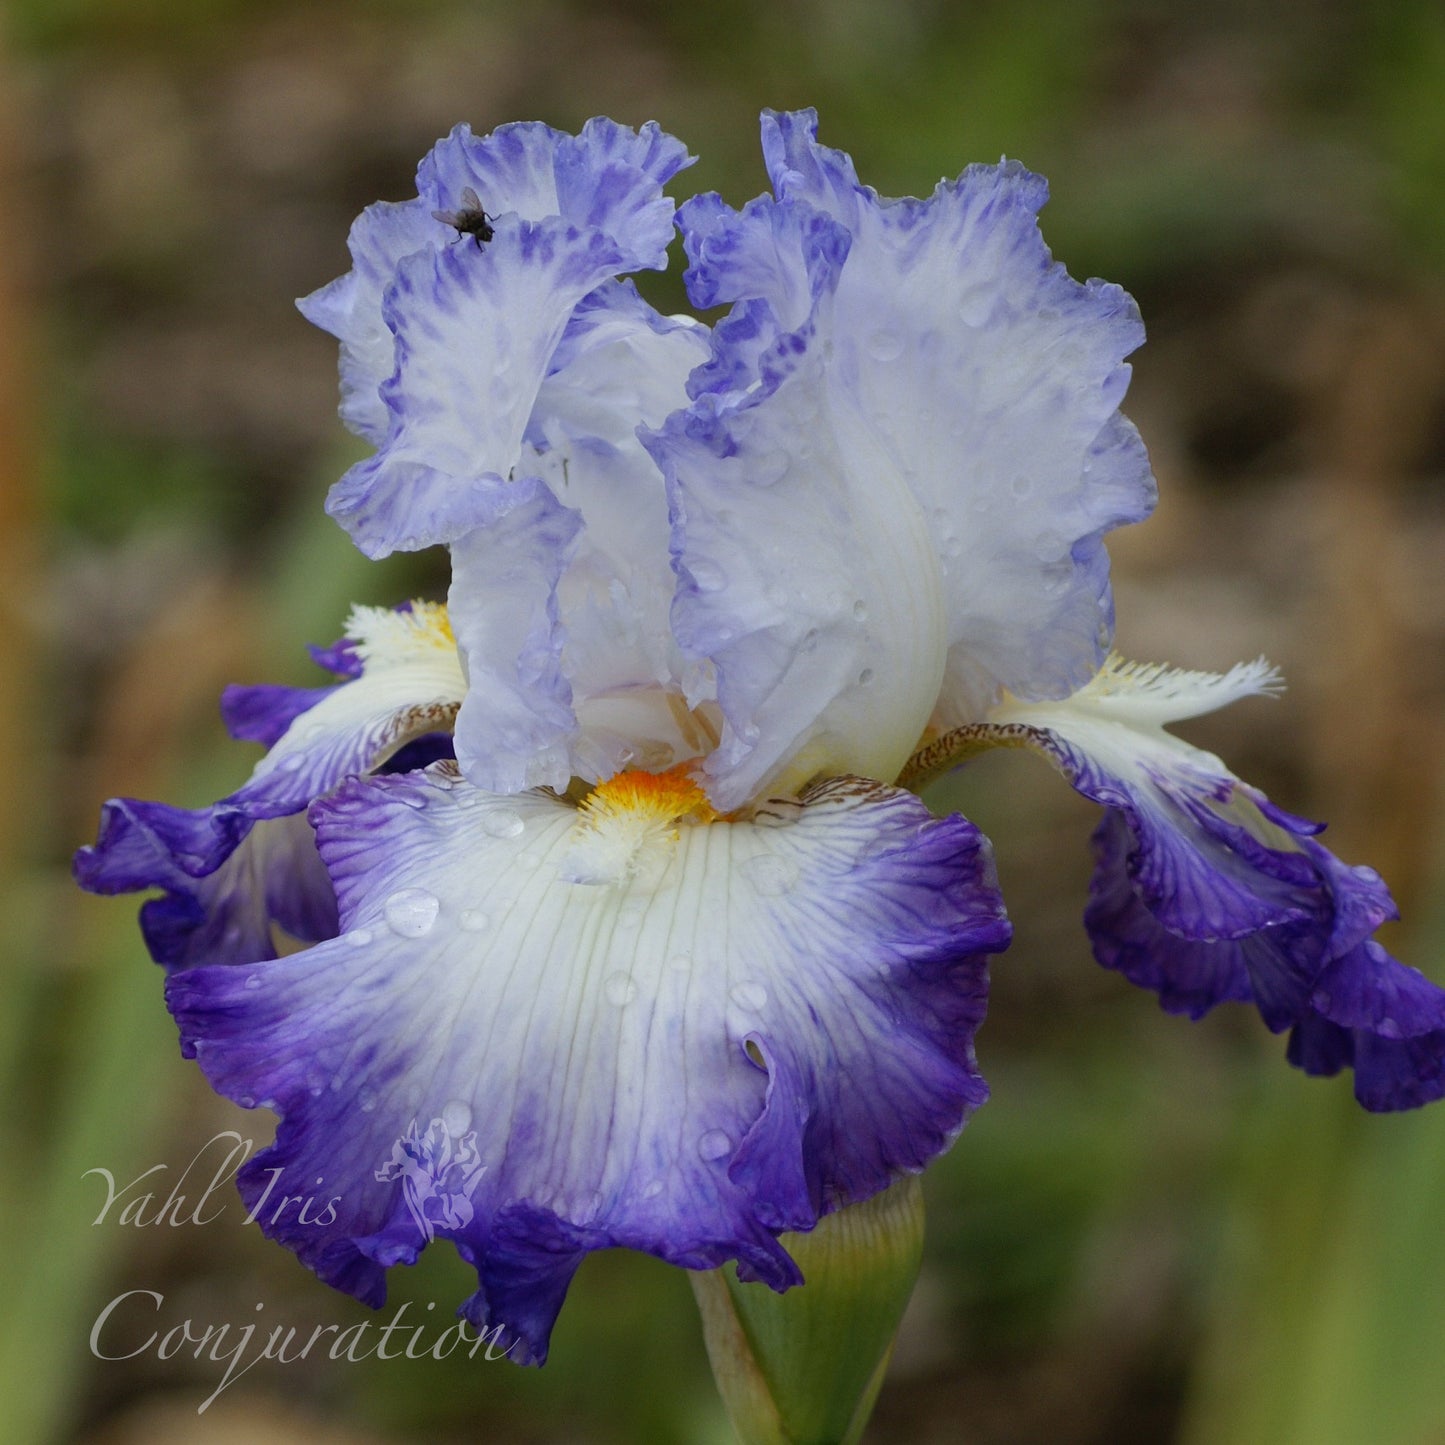 Conjuration - Tall bearded iris